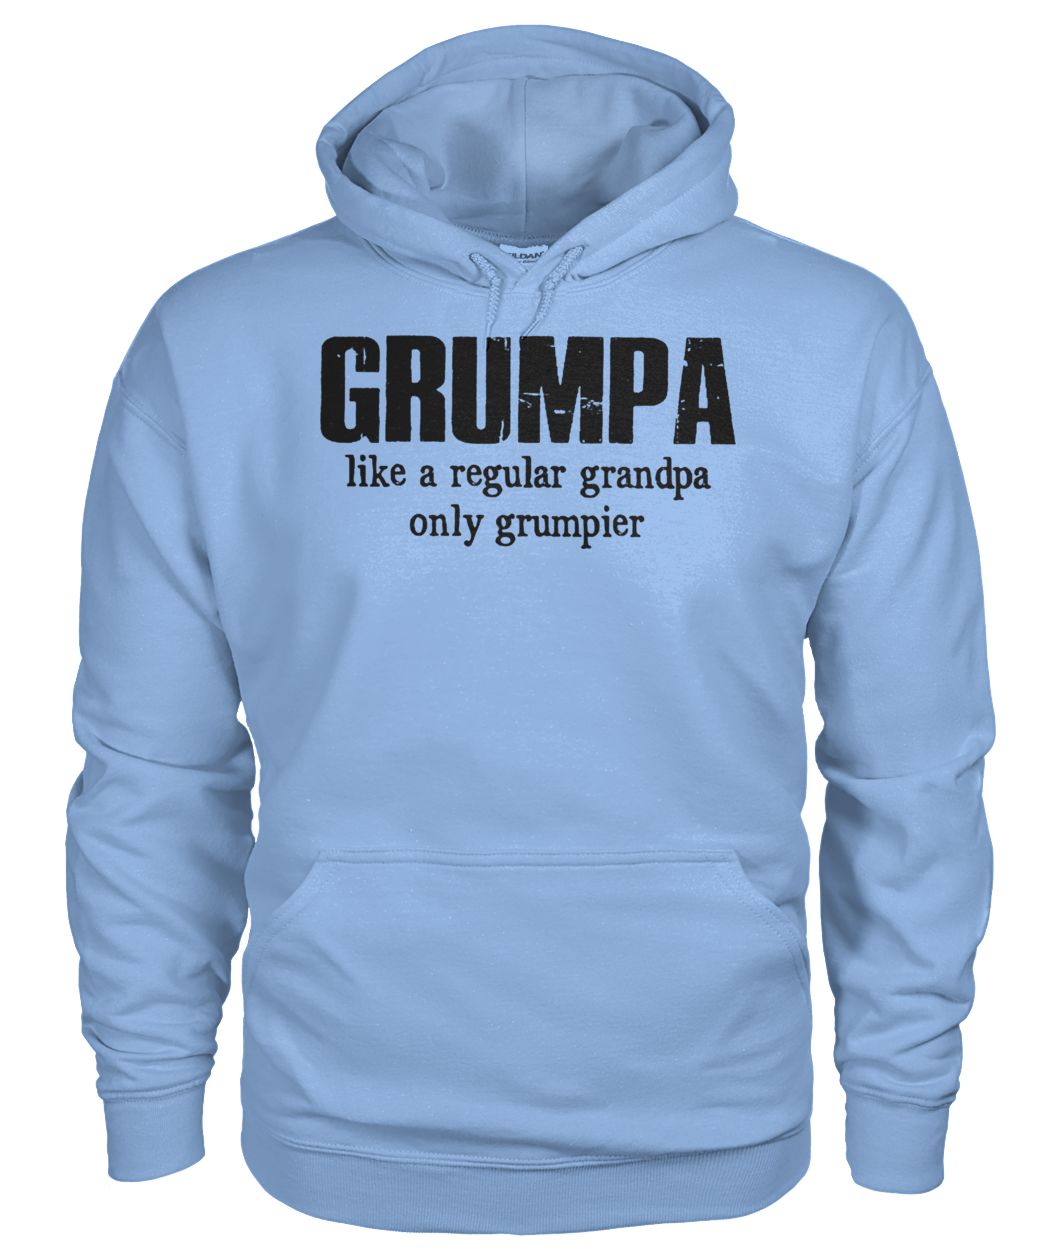 Grumpa like a regular grandpa only grumpier gildan hoodie